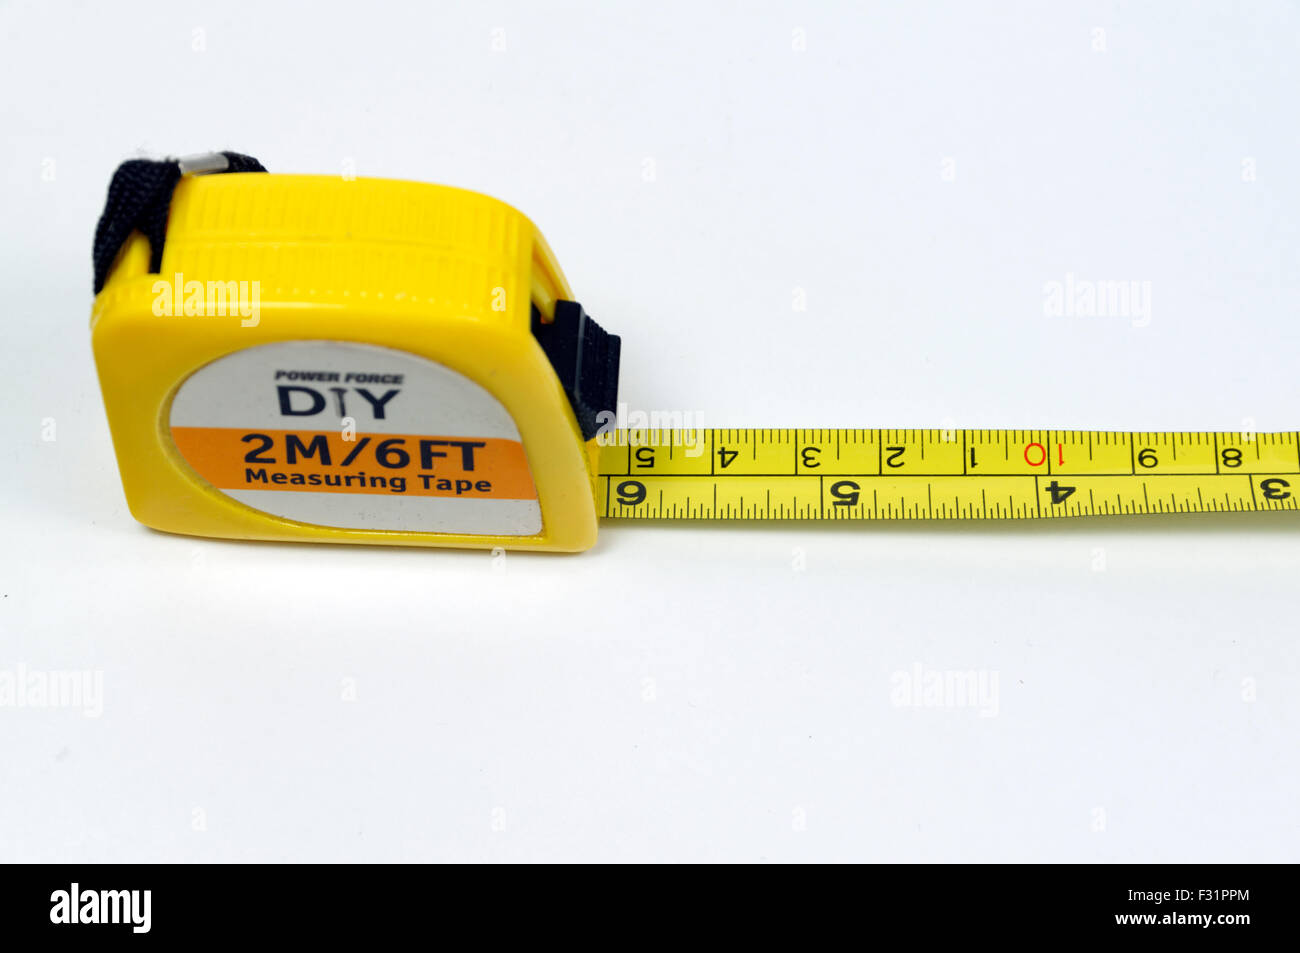 Diy tape measure. Stock Photo